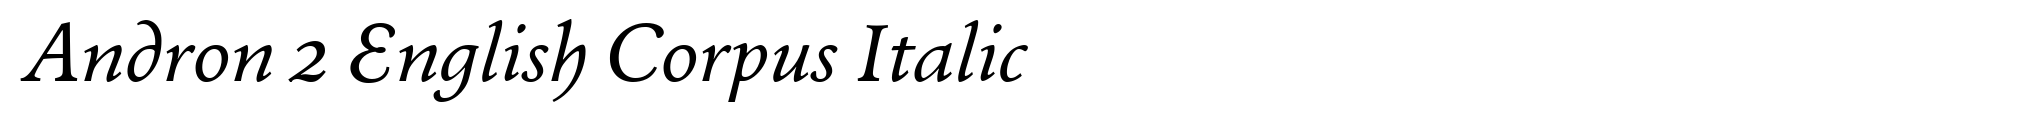 Andron 2 English Corpus Italic image